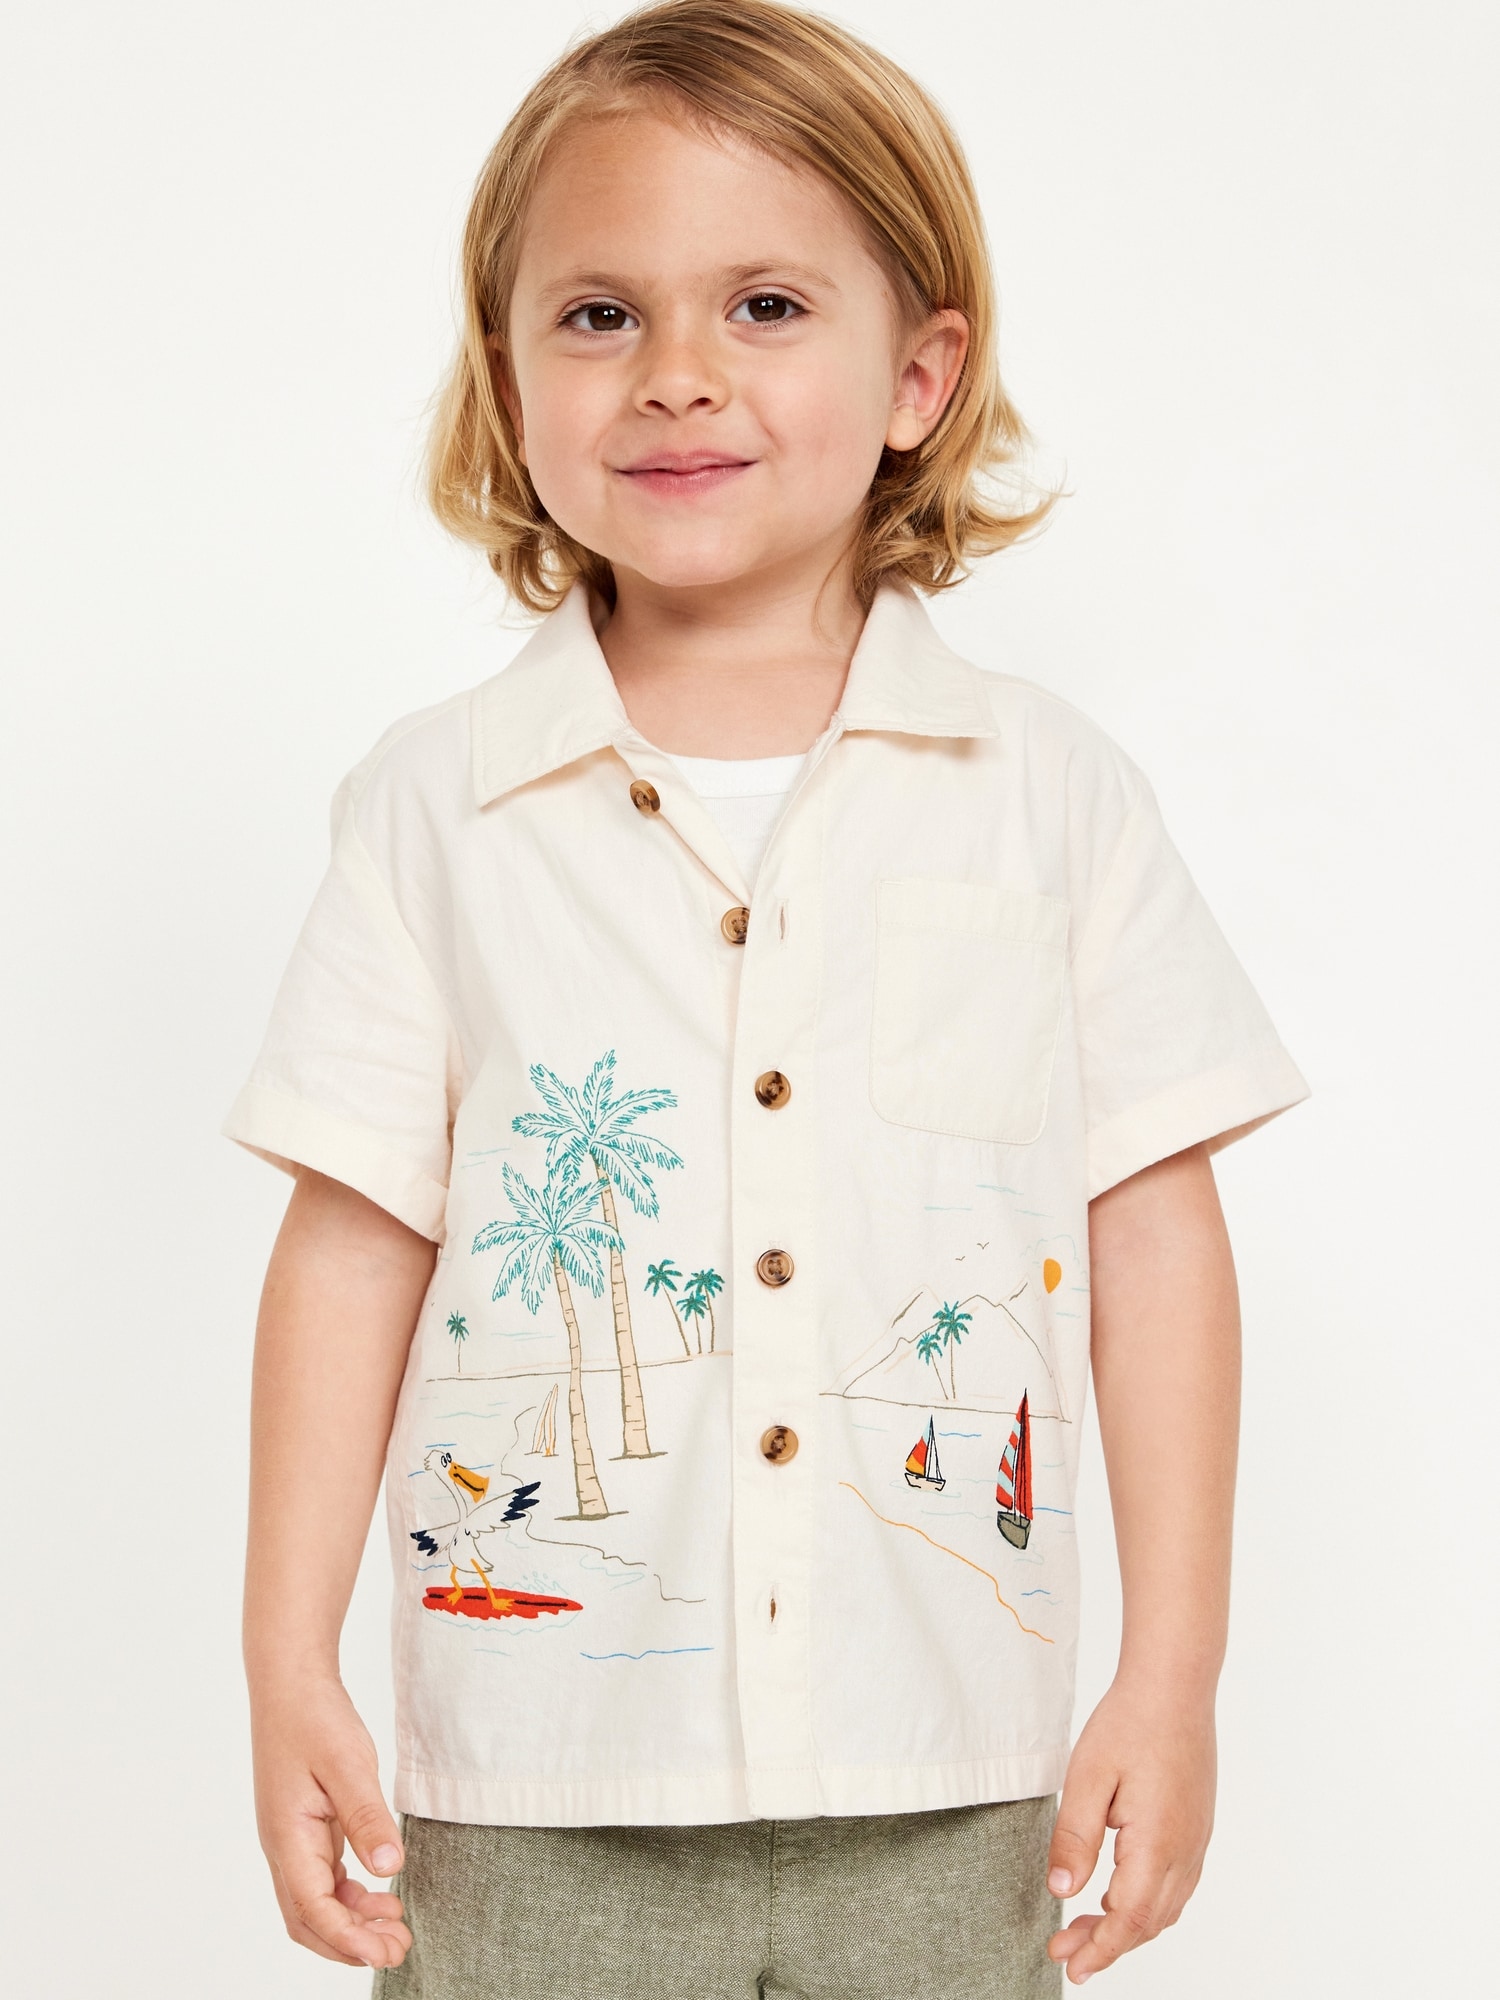 Short-Sleeve Graphic Pocket Shirt for Toddler Boys